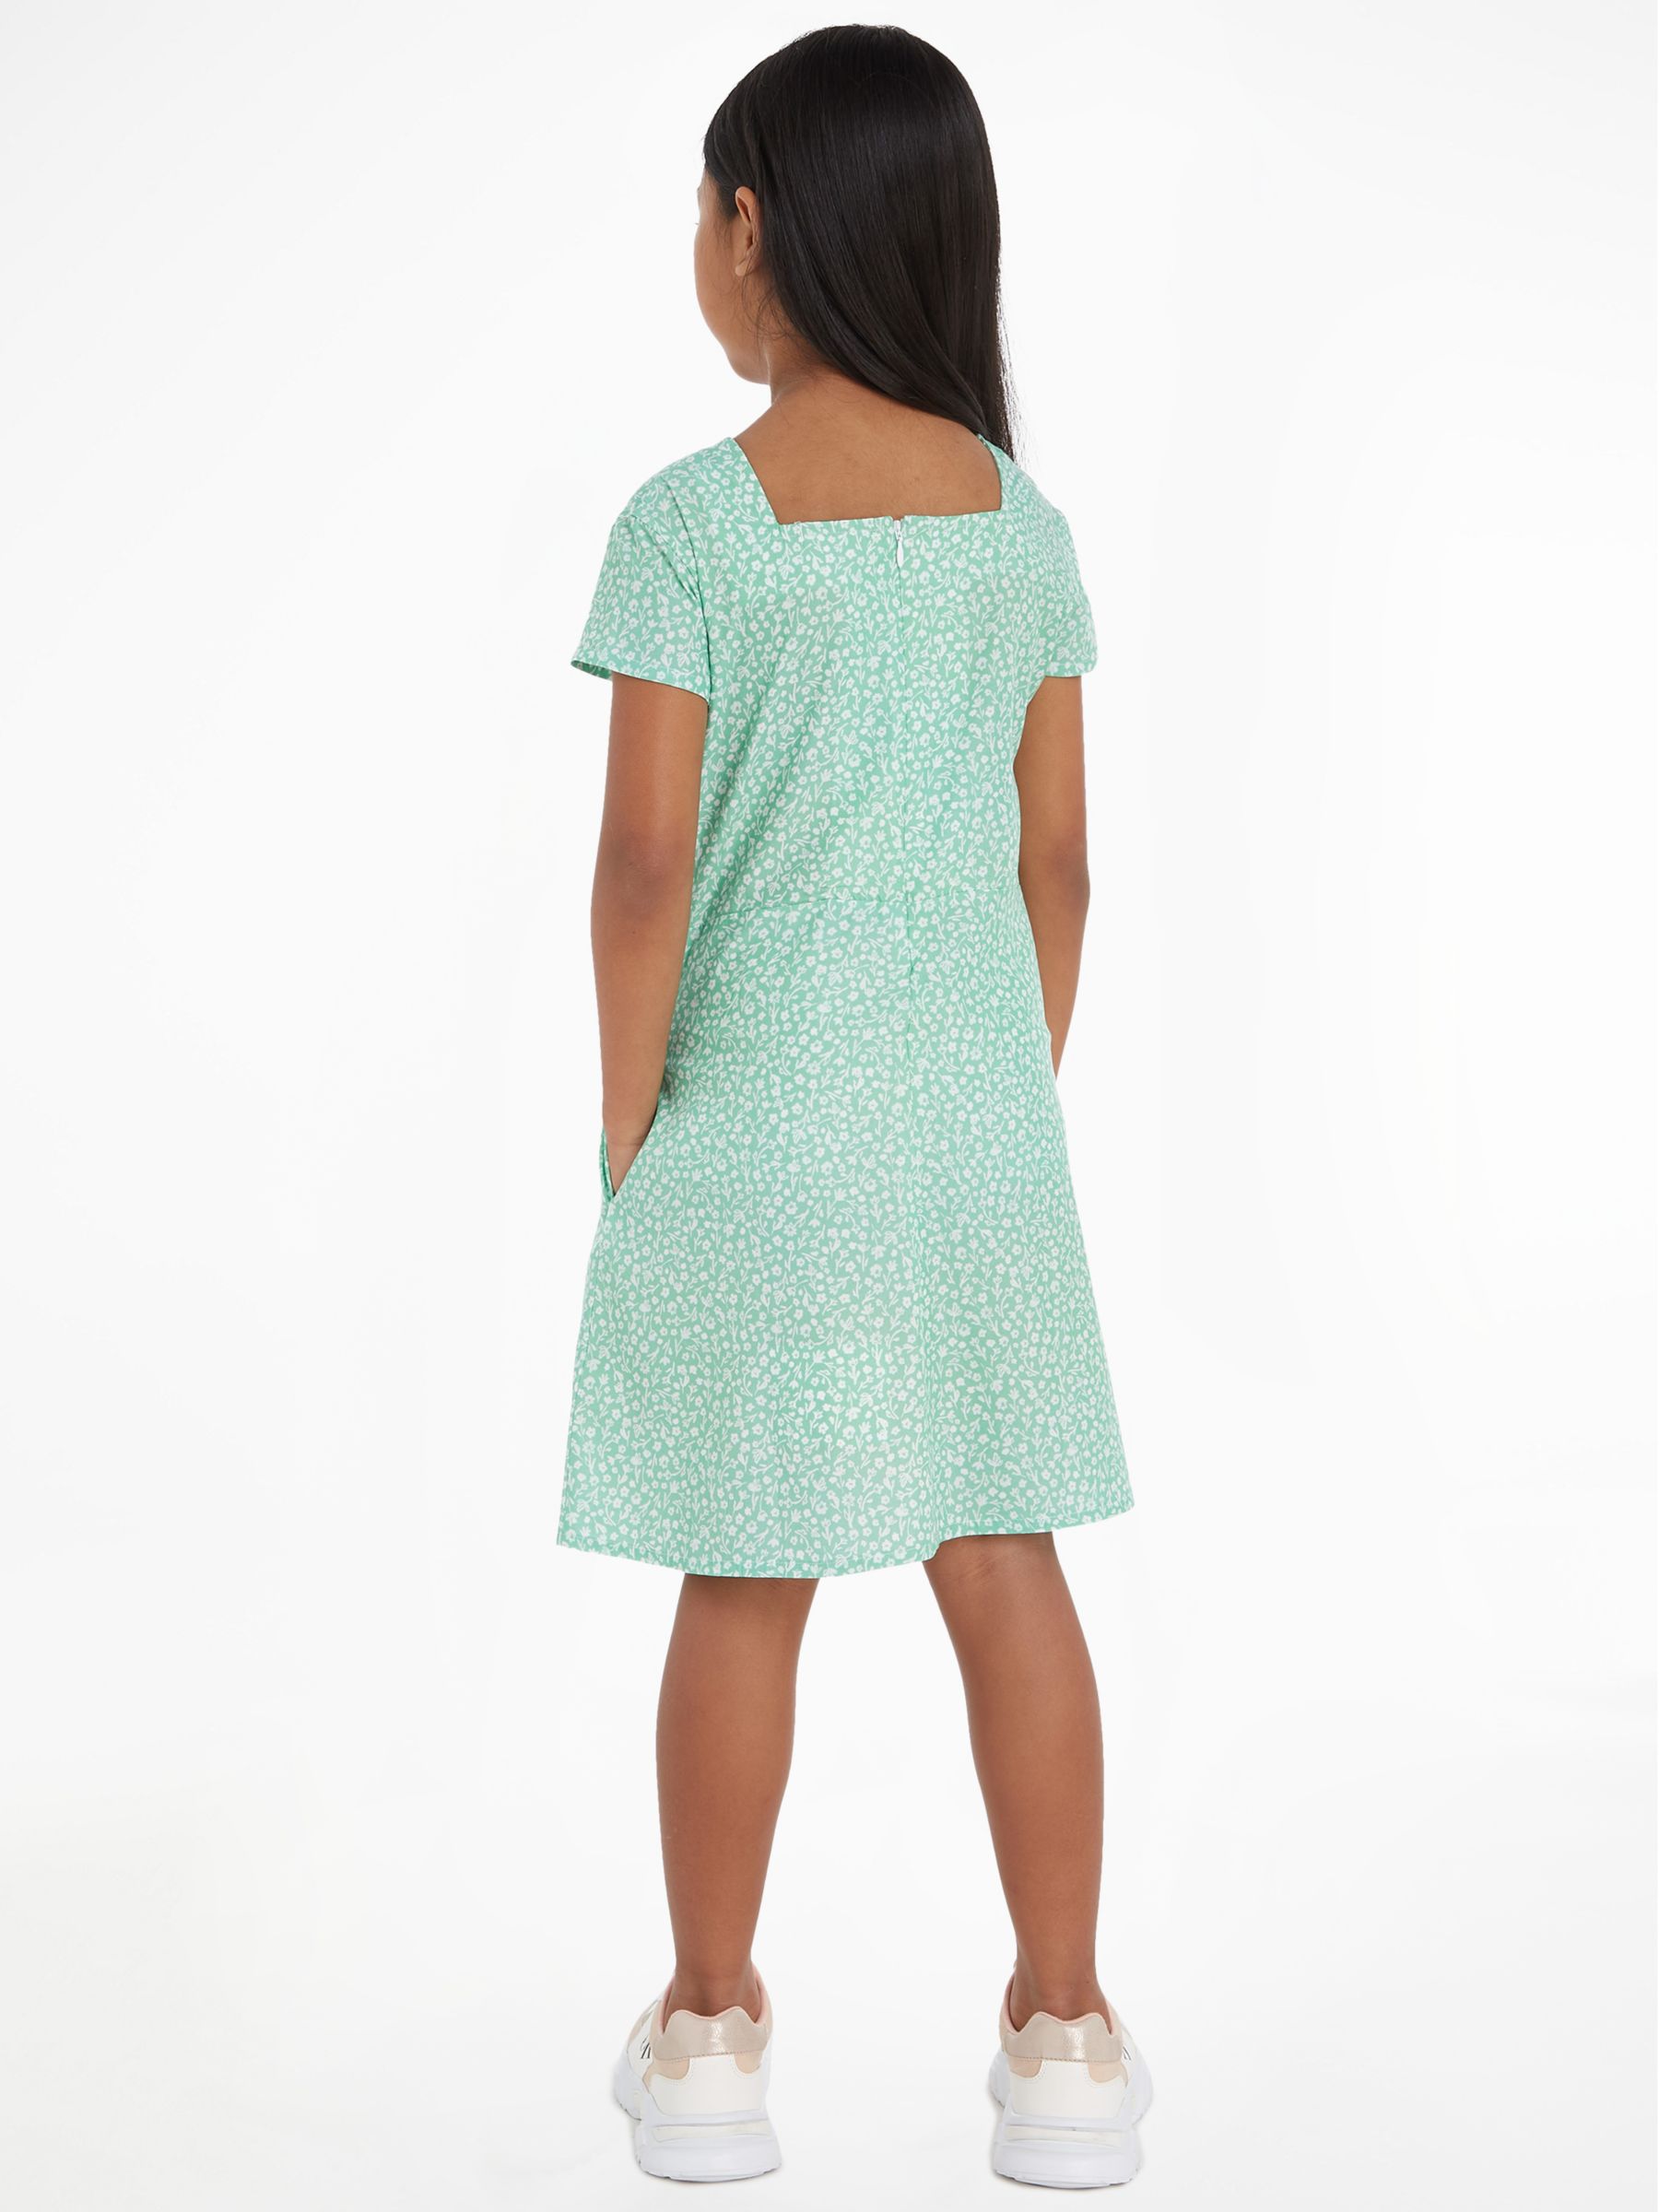 Calvin Klein Jeans Kids' Floral Mini Dress, Multi, 8 years